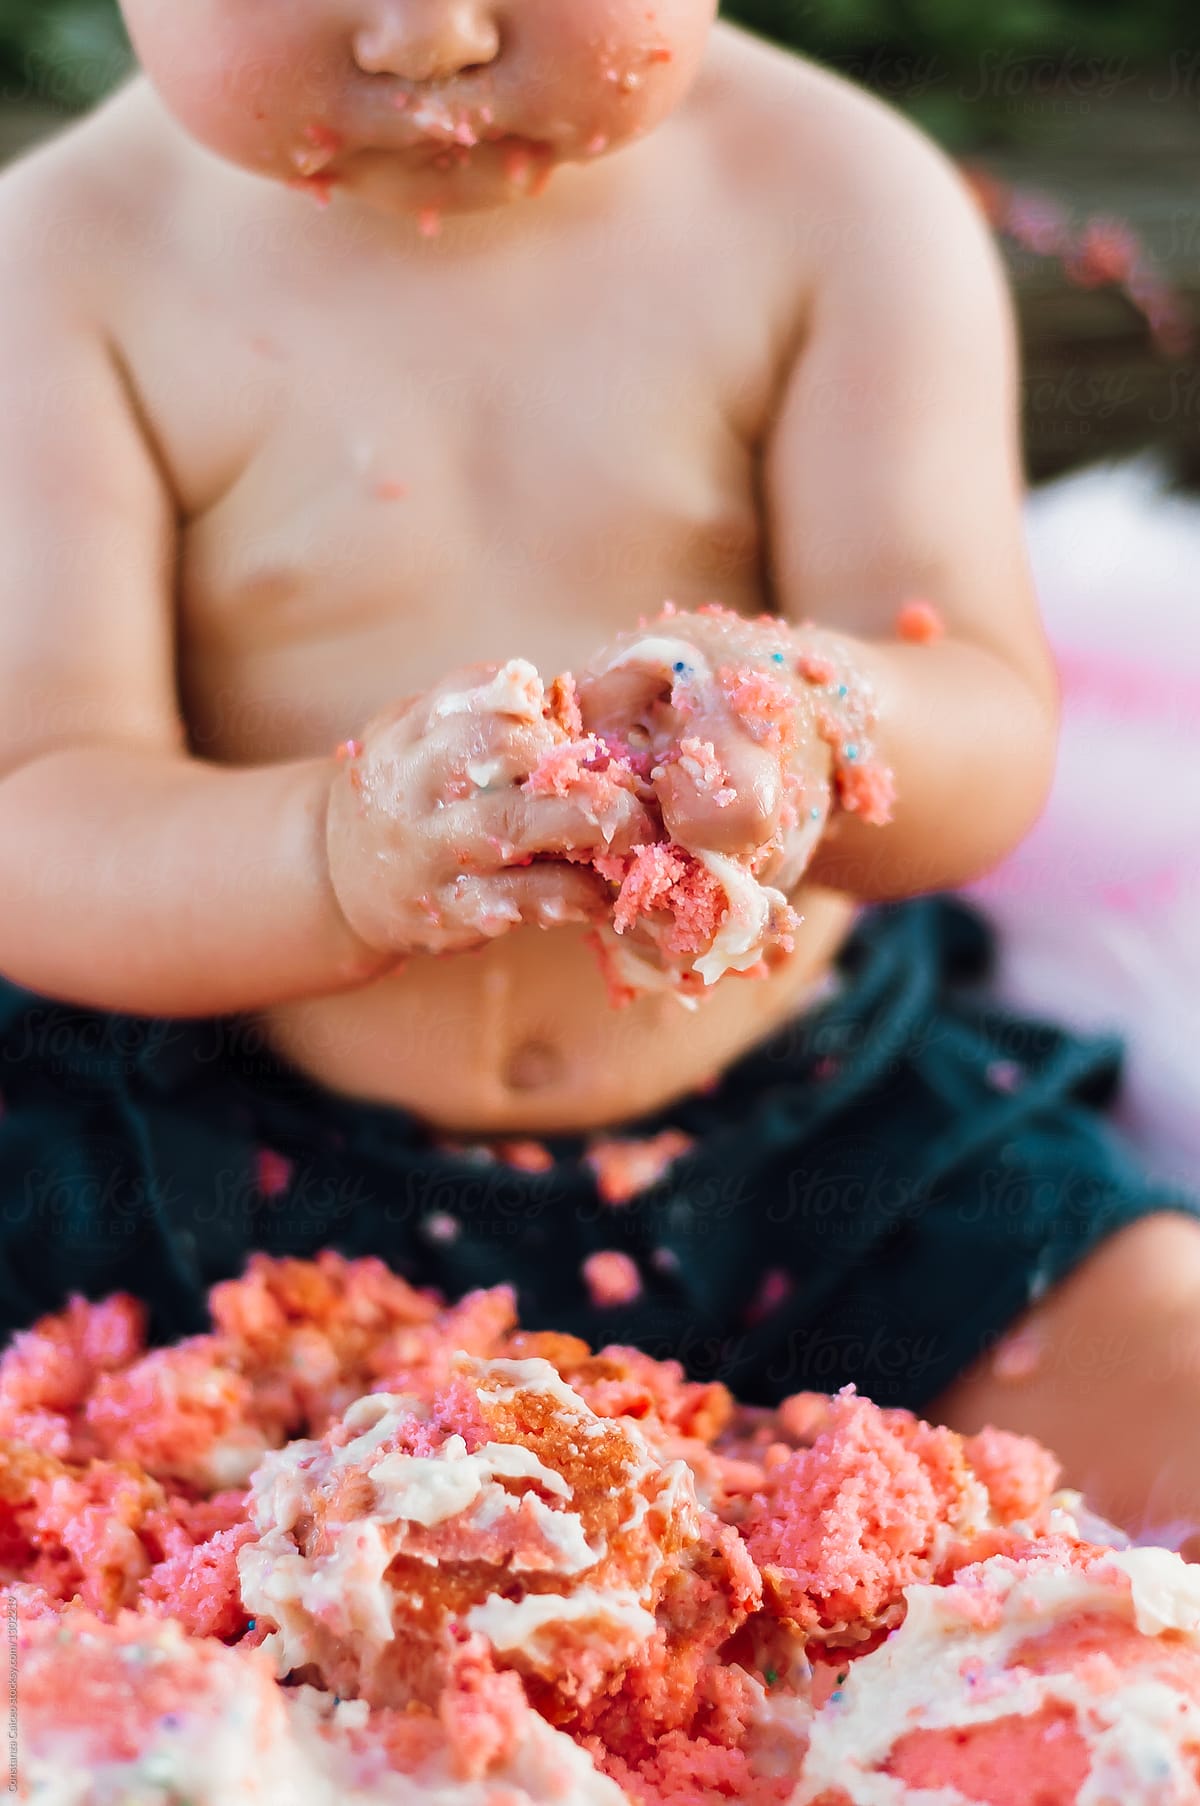 Baby\'s hand smashing a bright pink sugary cake